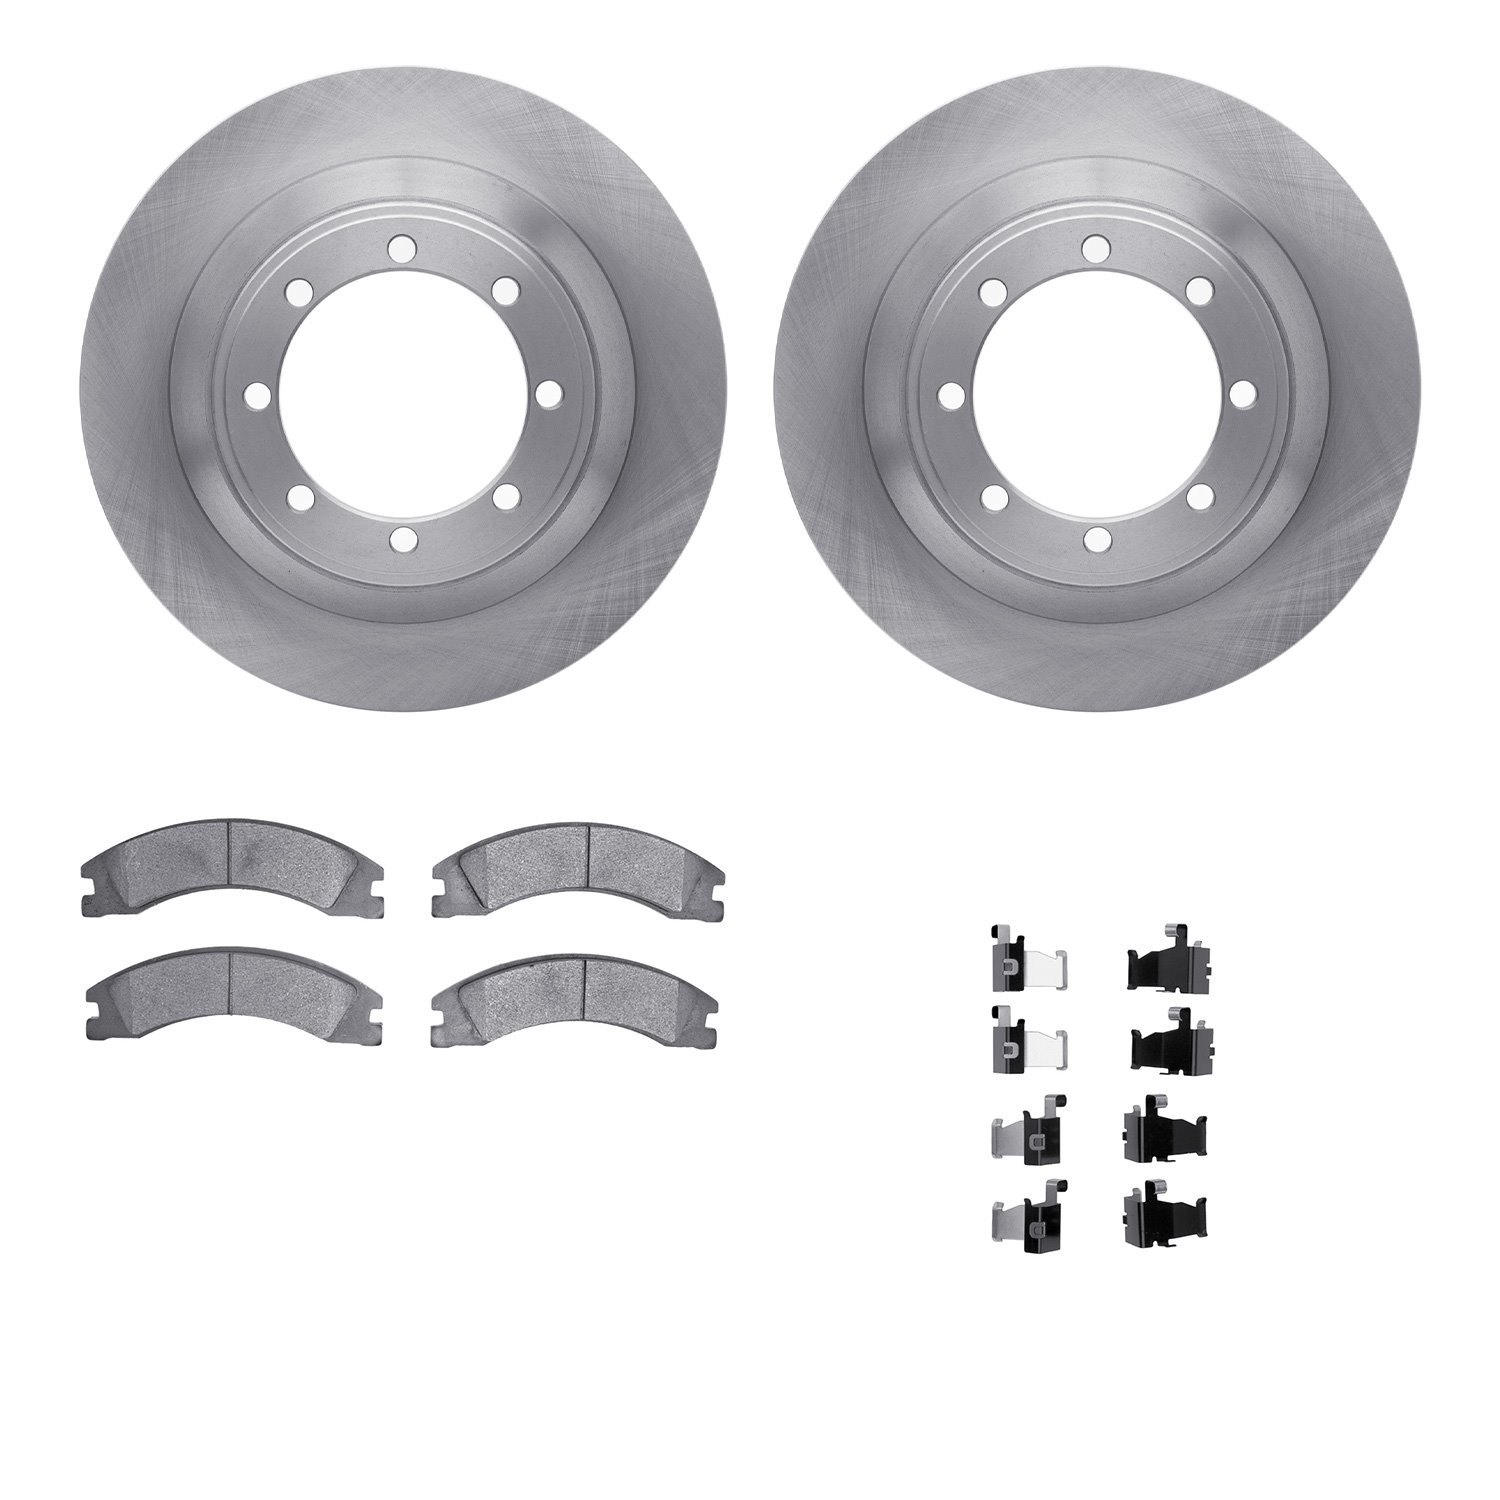 6212-99666 Brake Rotors w/Heavy-Duty Brake Pads Kit & Hardware, Fits Select Ford/Lincoln/Mercury/Mazda, Position: Rear